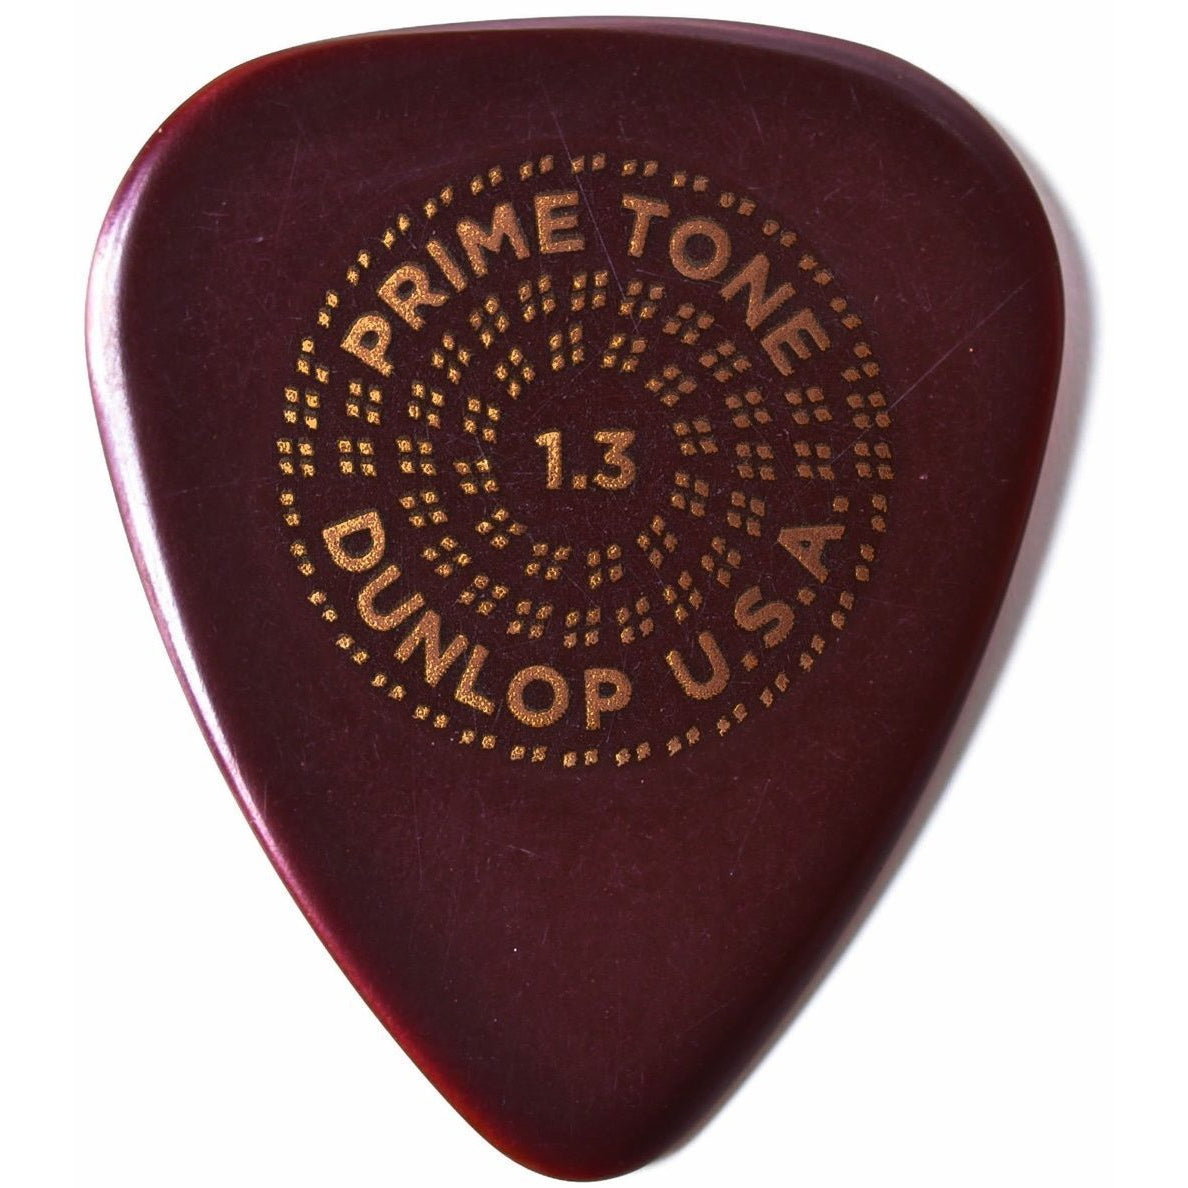 Dunlop Primetone Standard Sculpted Plectra Guitar Picks, 511P1.3, 3-Pack, 1.3mm